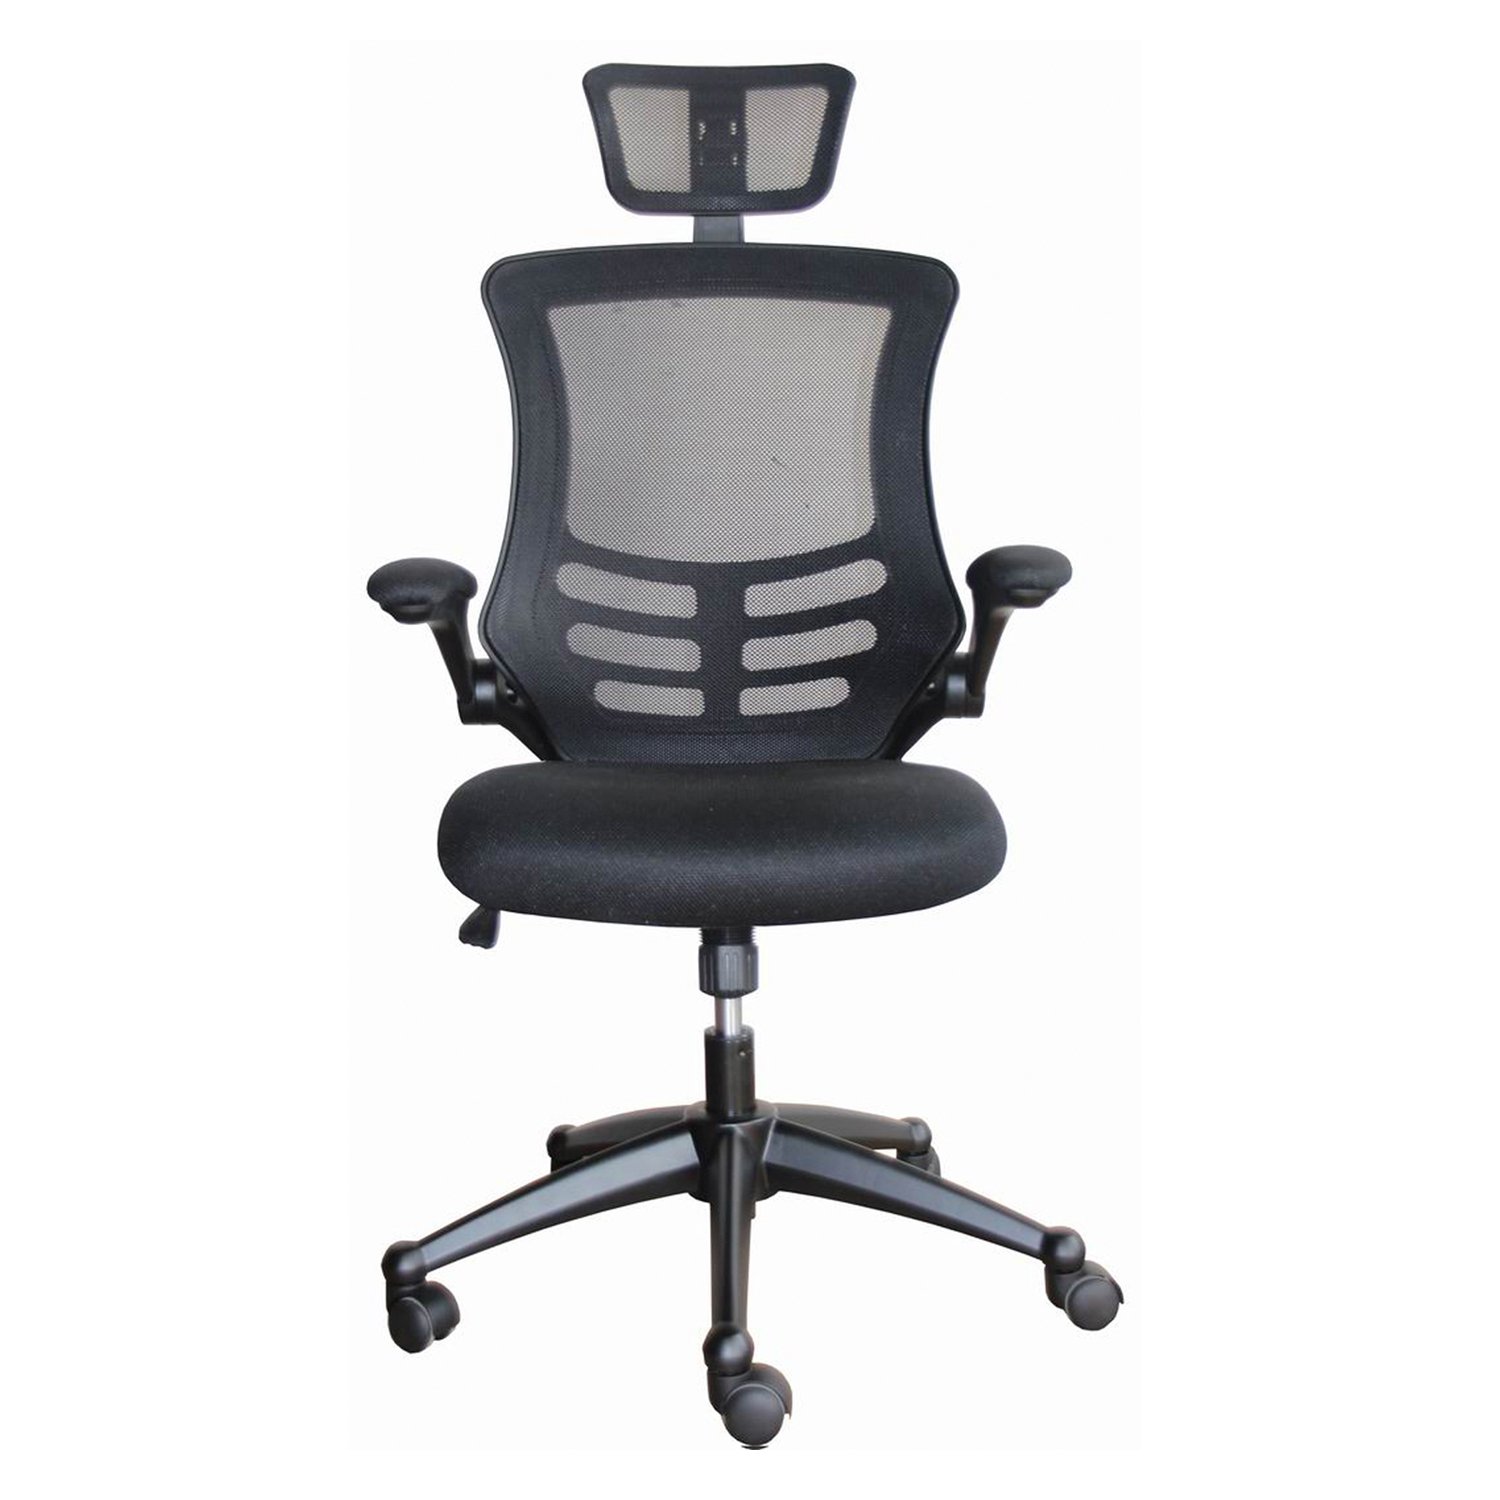 Biuro kėdė RAGUSA, 66,5x51x117-126 cm, juoda